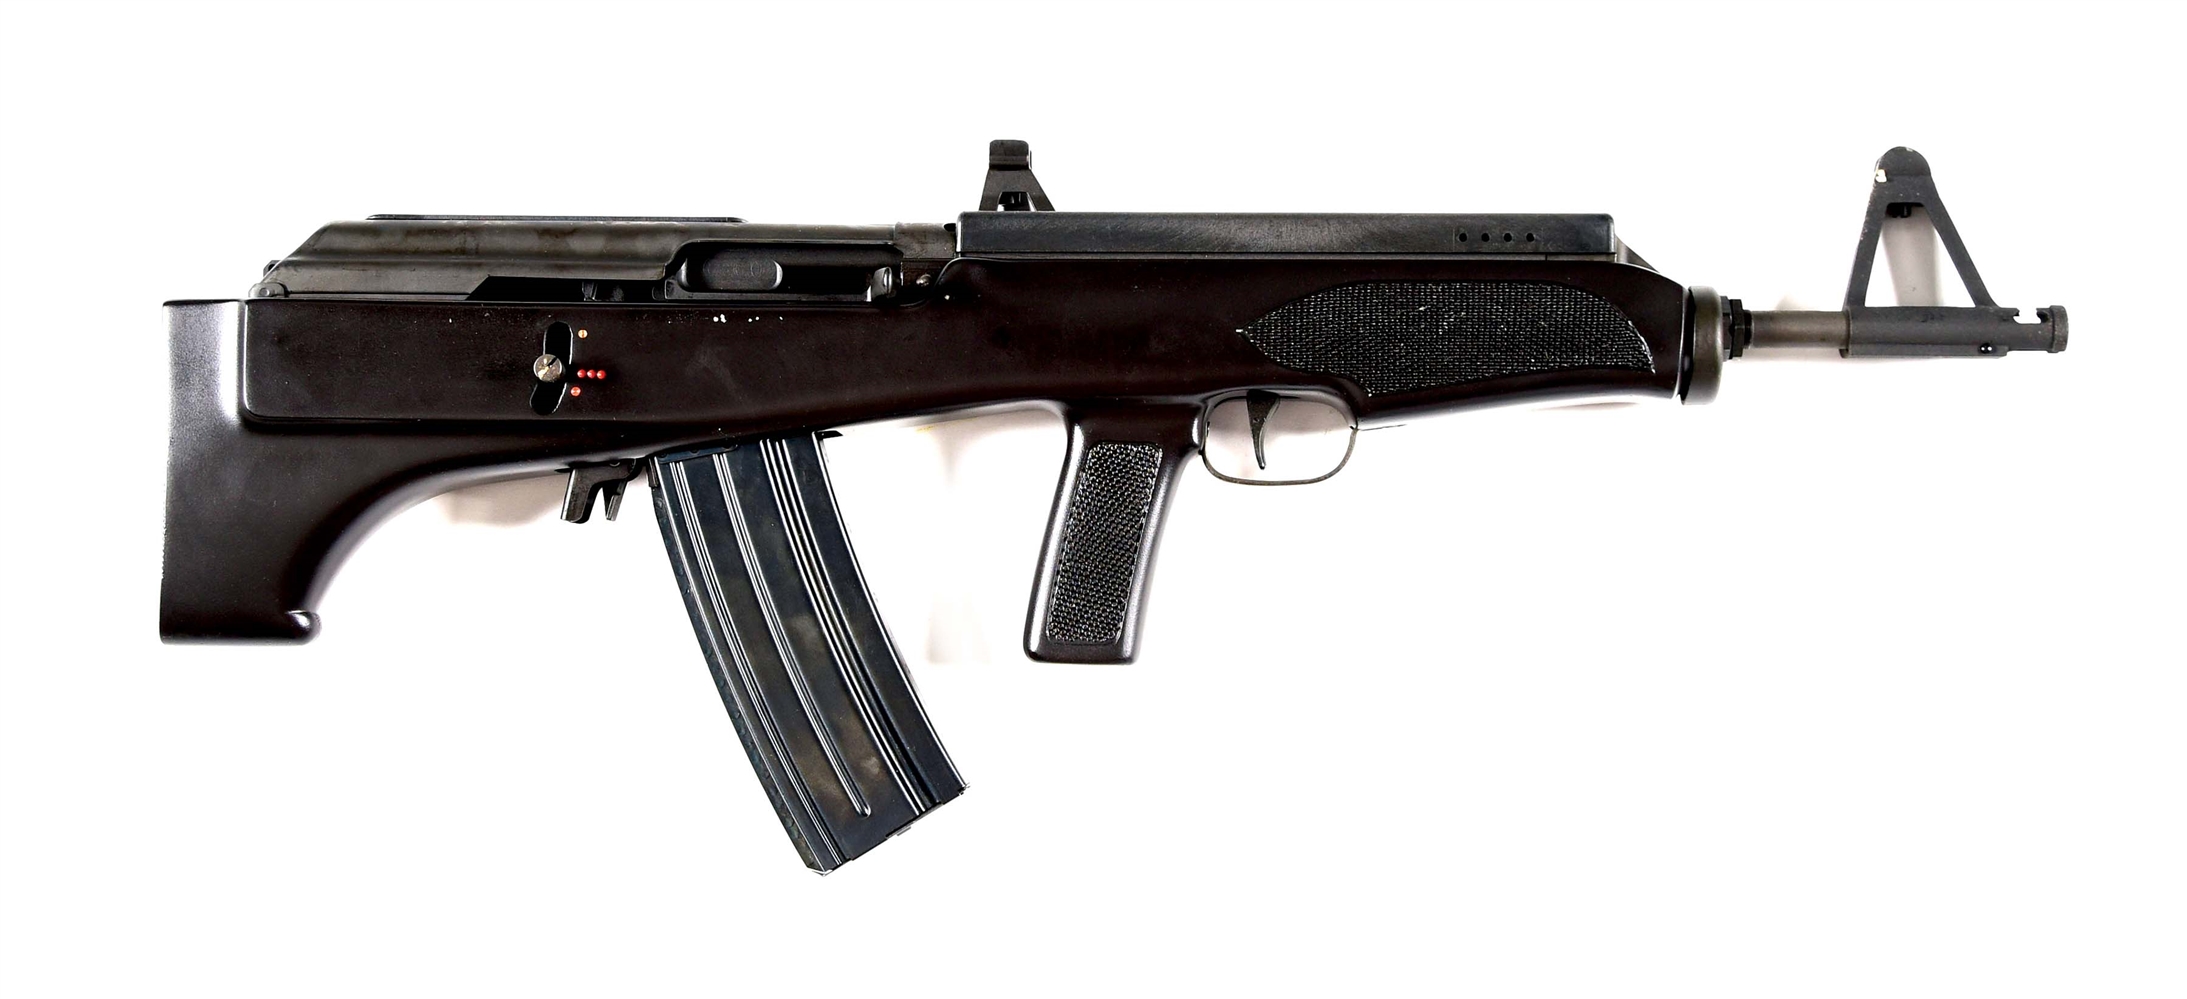 (N) A VERY GOOD VALMET DEFENSE M82 MACHINE GUN (FULLY TRANSFERABLE).